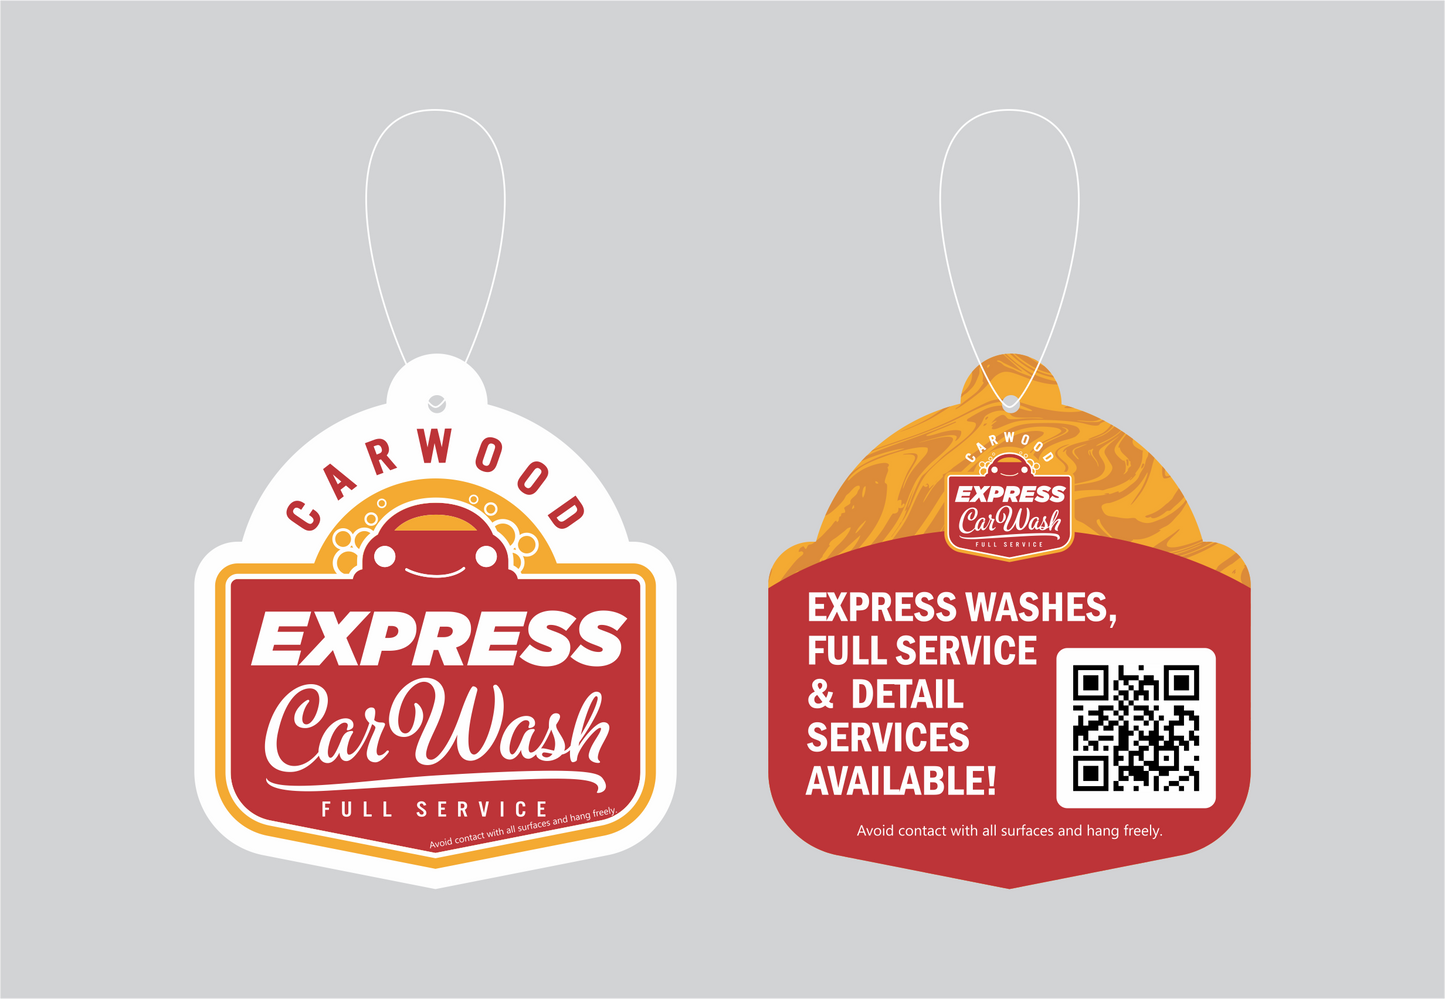 Carwood Express Car Wash